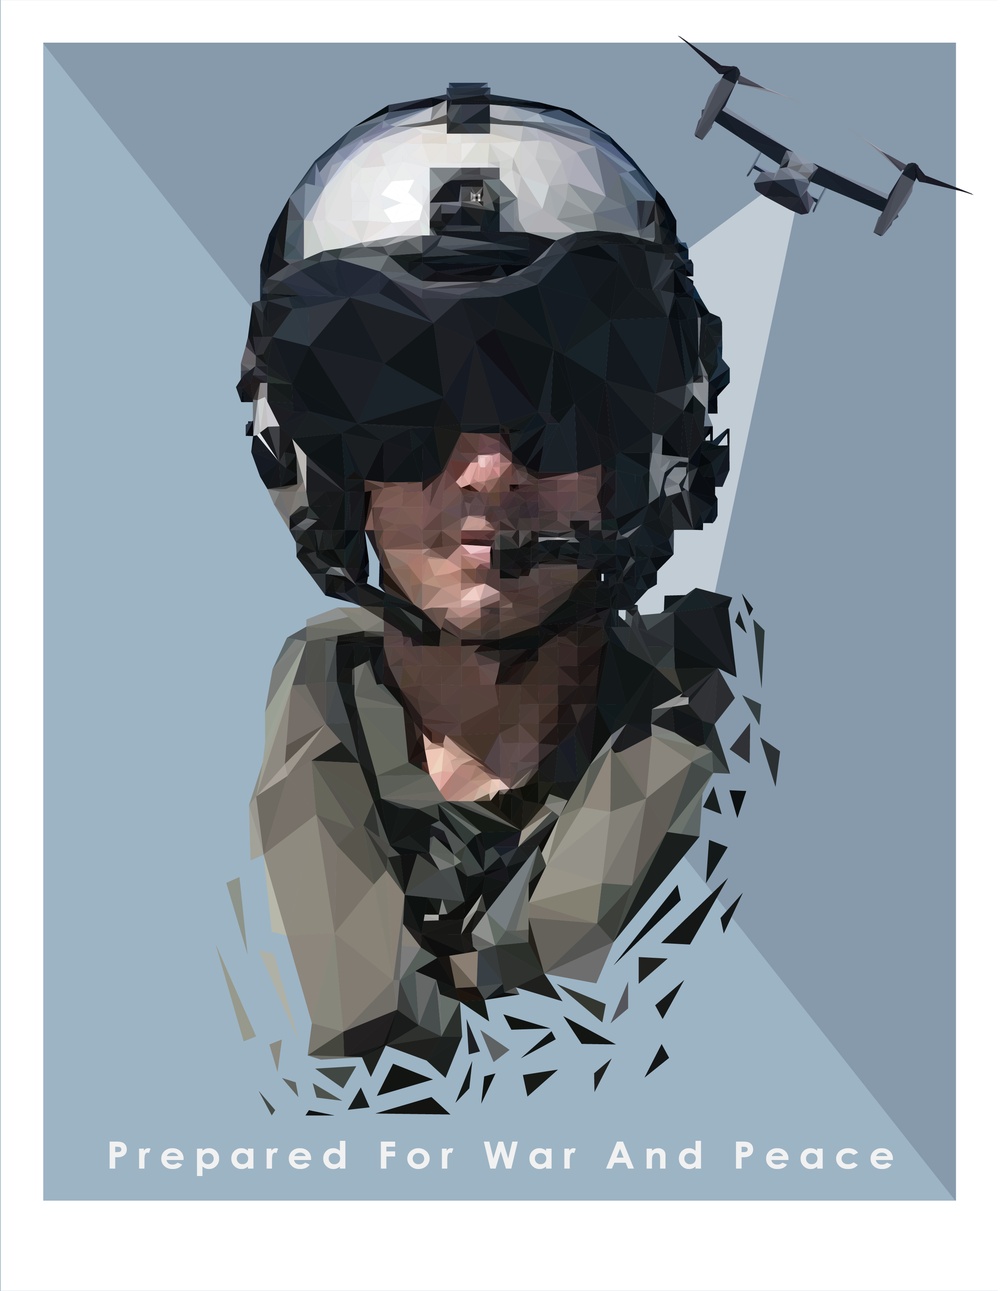 Digital Art MV-22B: Prepared for War and Peace